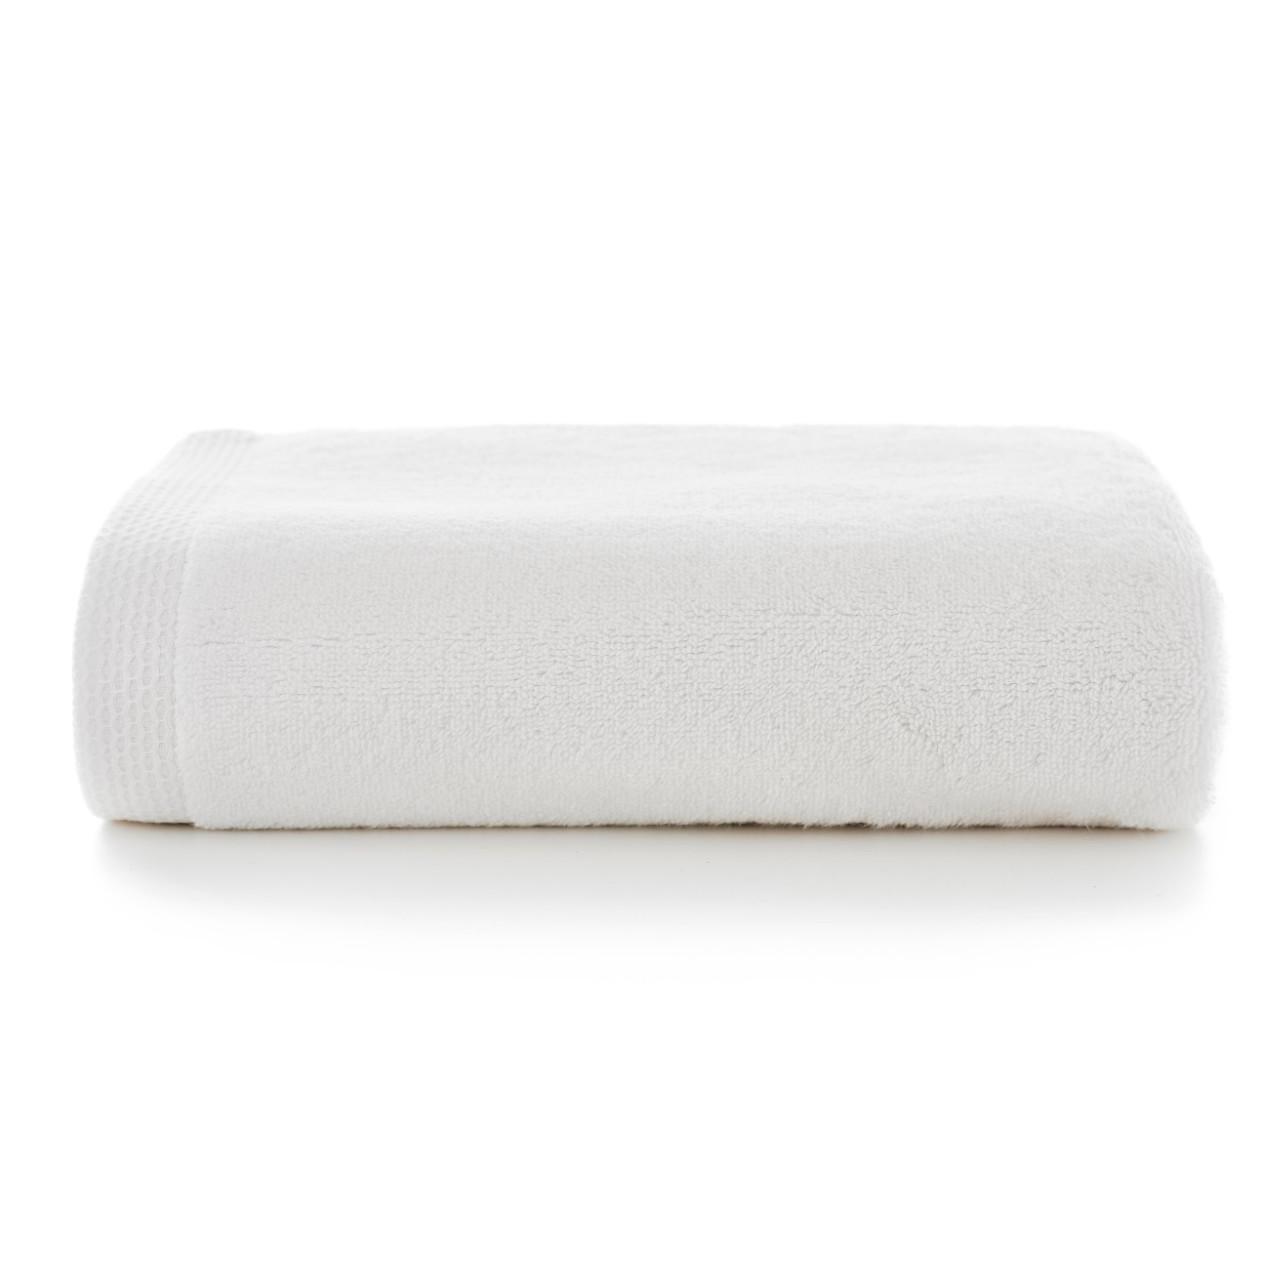 100% Cotton Egyptian Spa Bath Sheet, White